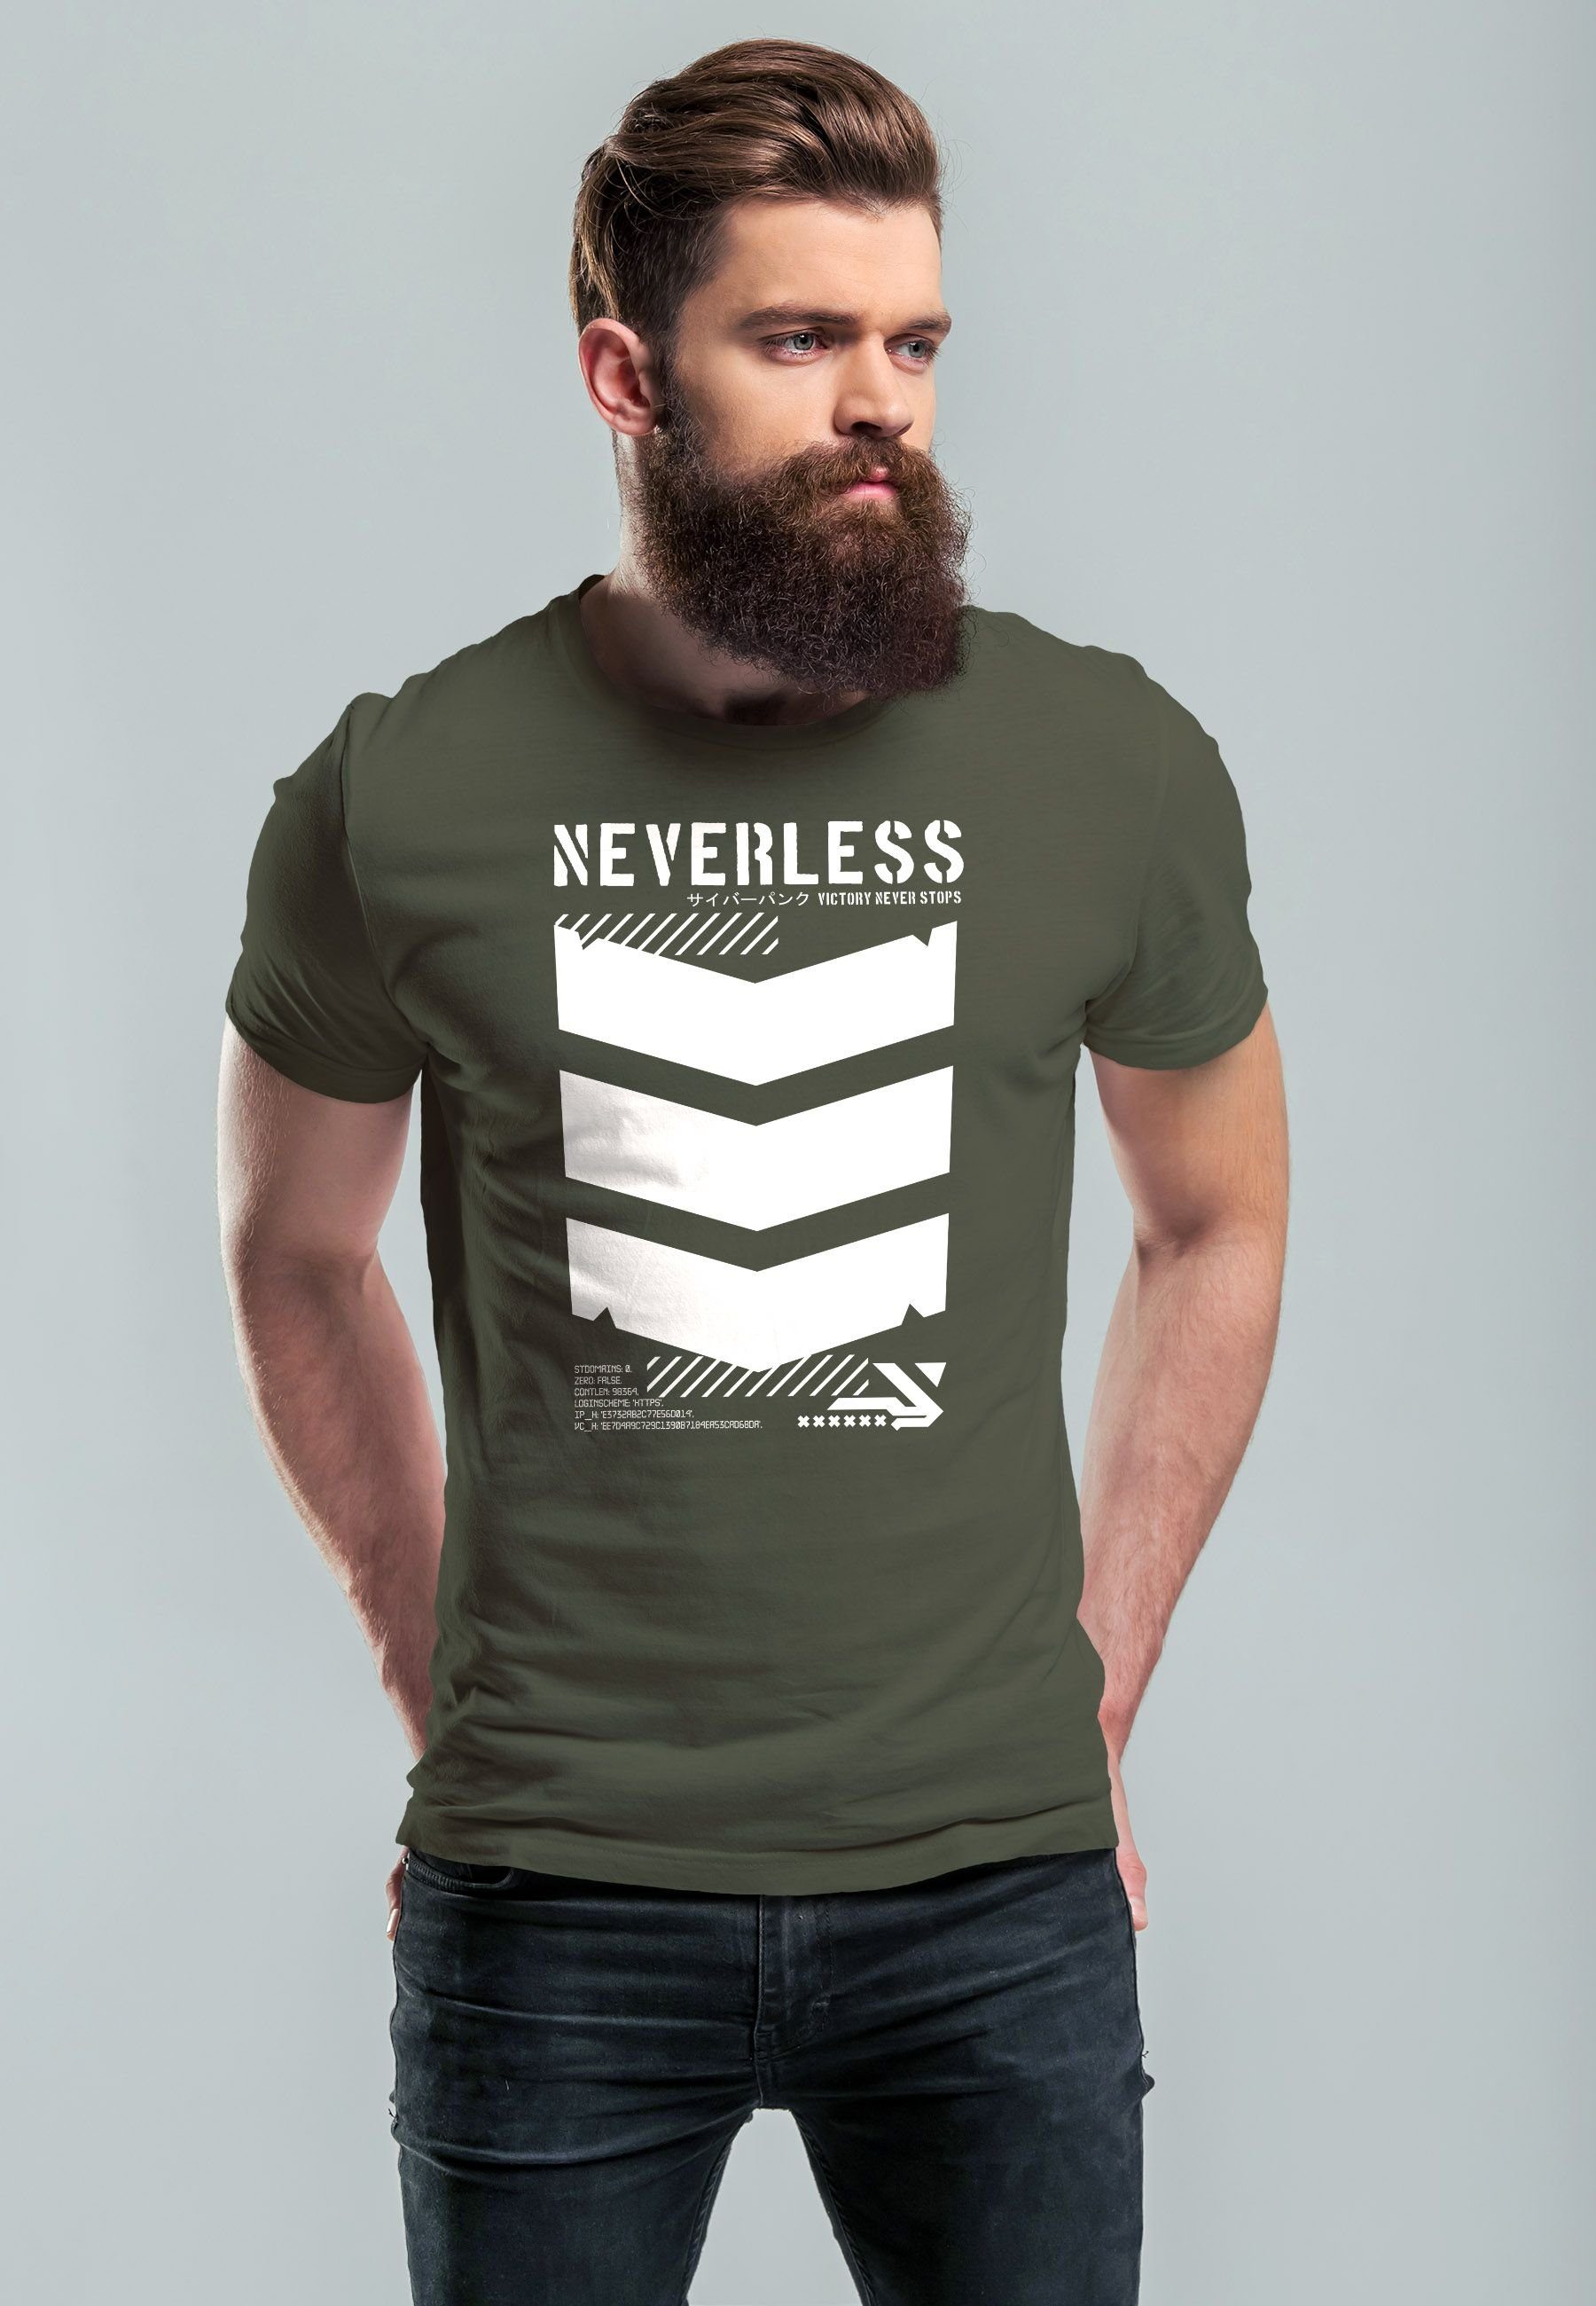 Neverless Print-Shirt Herren T-Shirt Techwear Print Streetstyle army Japanese mit Fas Motive Military Trend